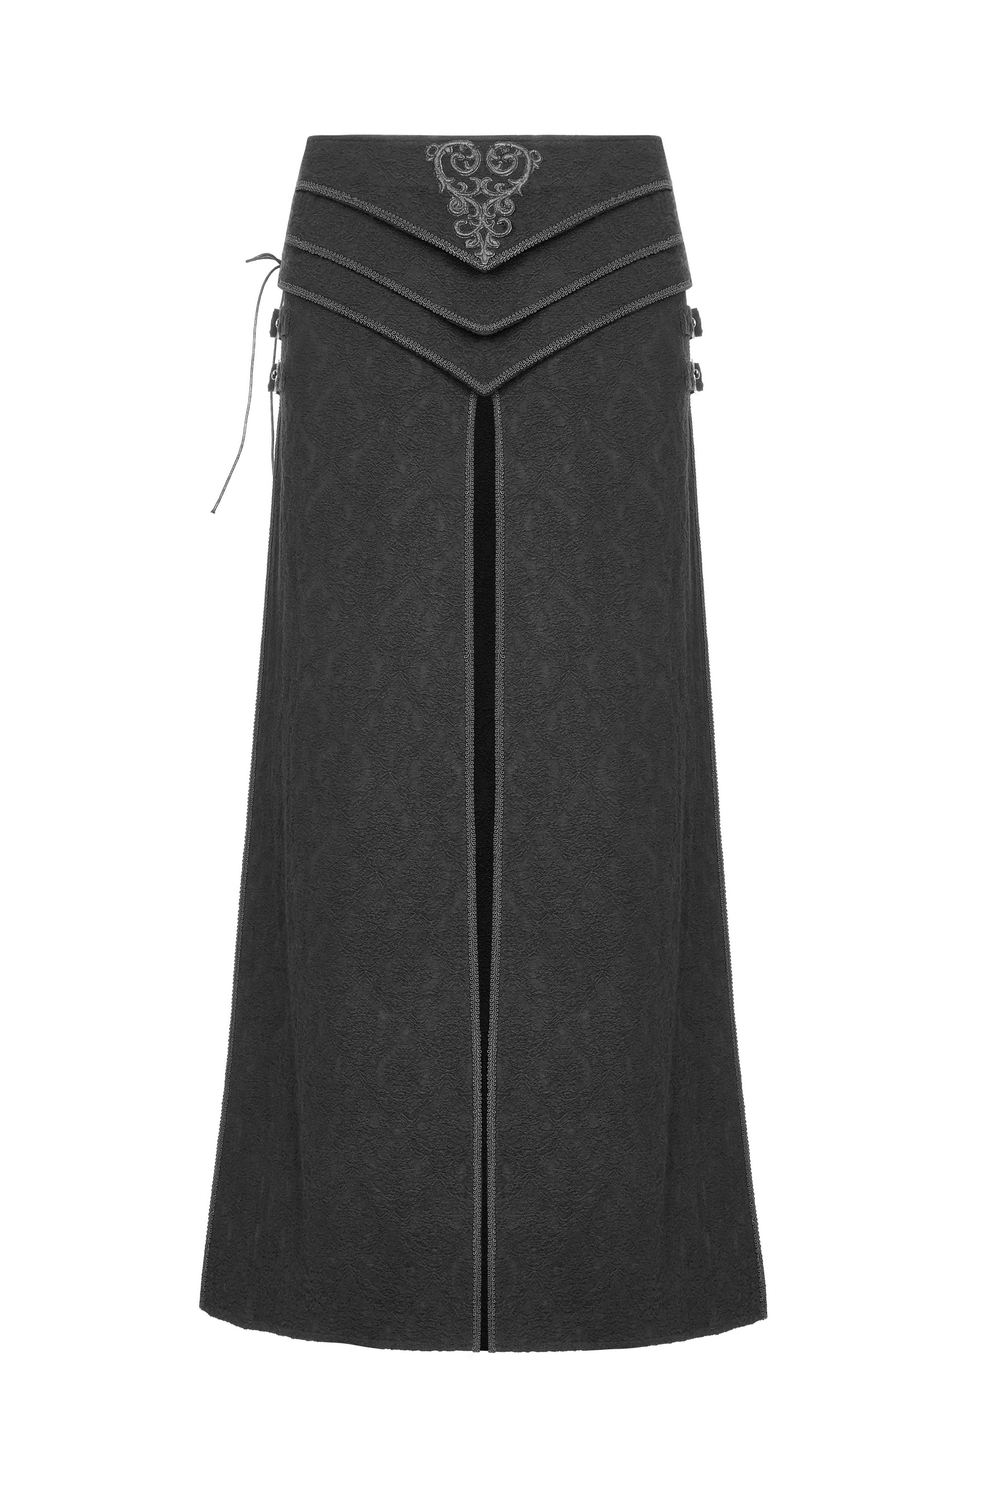 Dark Victorian Lace Up Long Skirt / Punk Rave